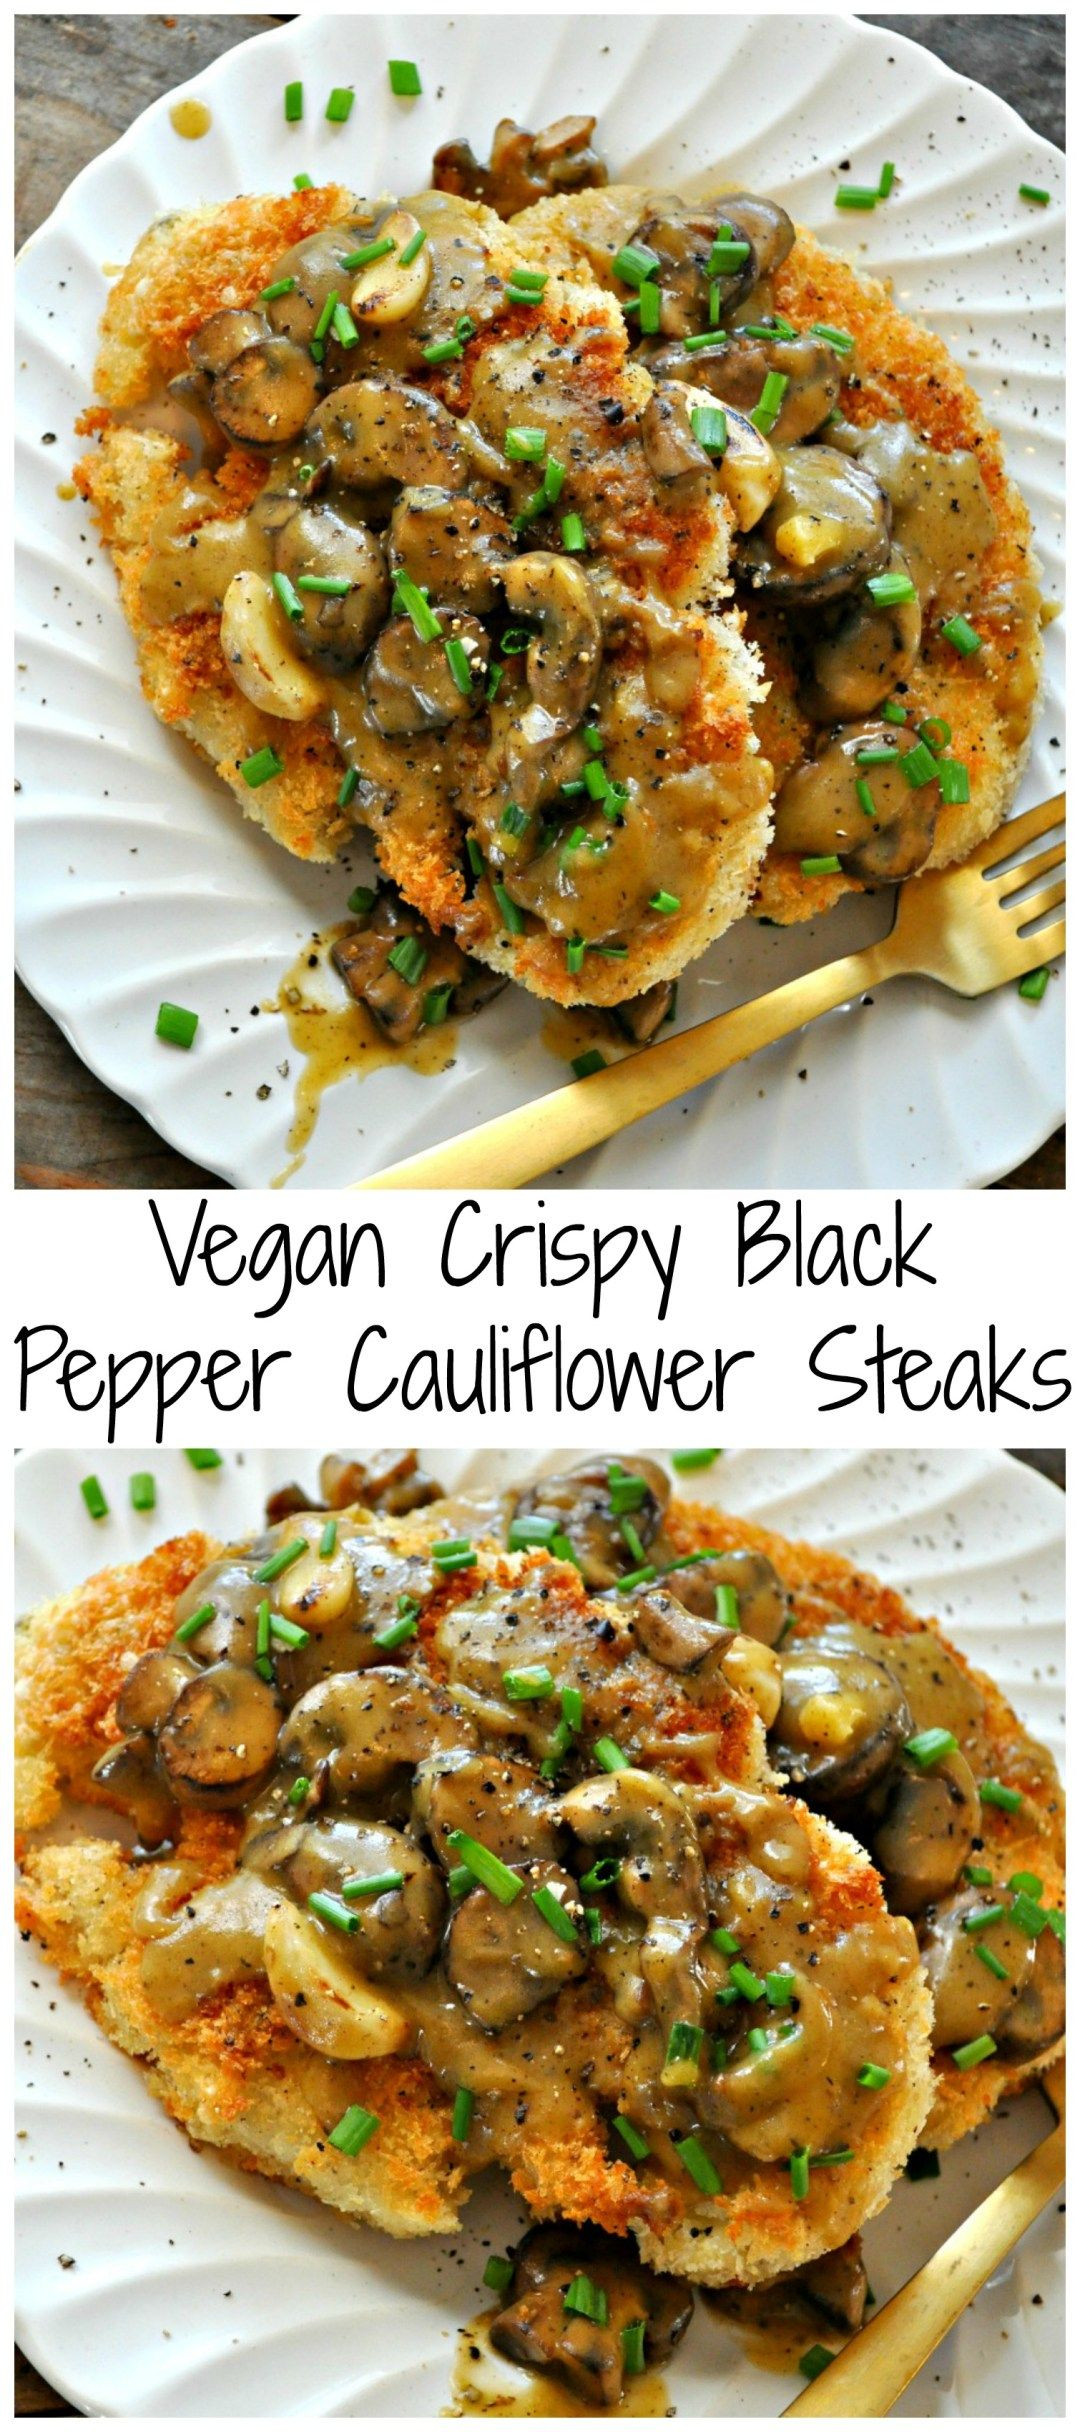 Cauliflower Steak Vegan
 Vegan Crispy Black Pepper Cauliflower Steaks